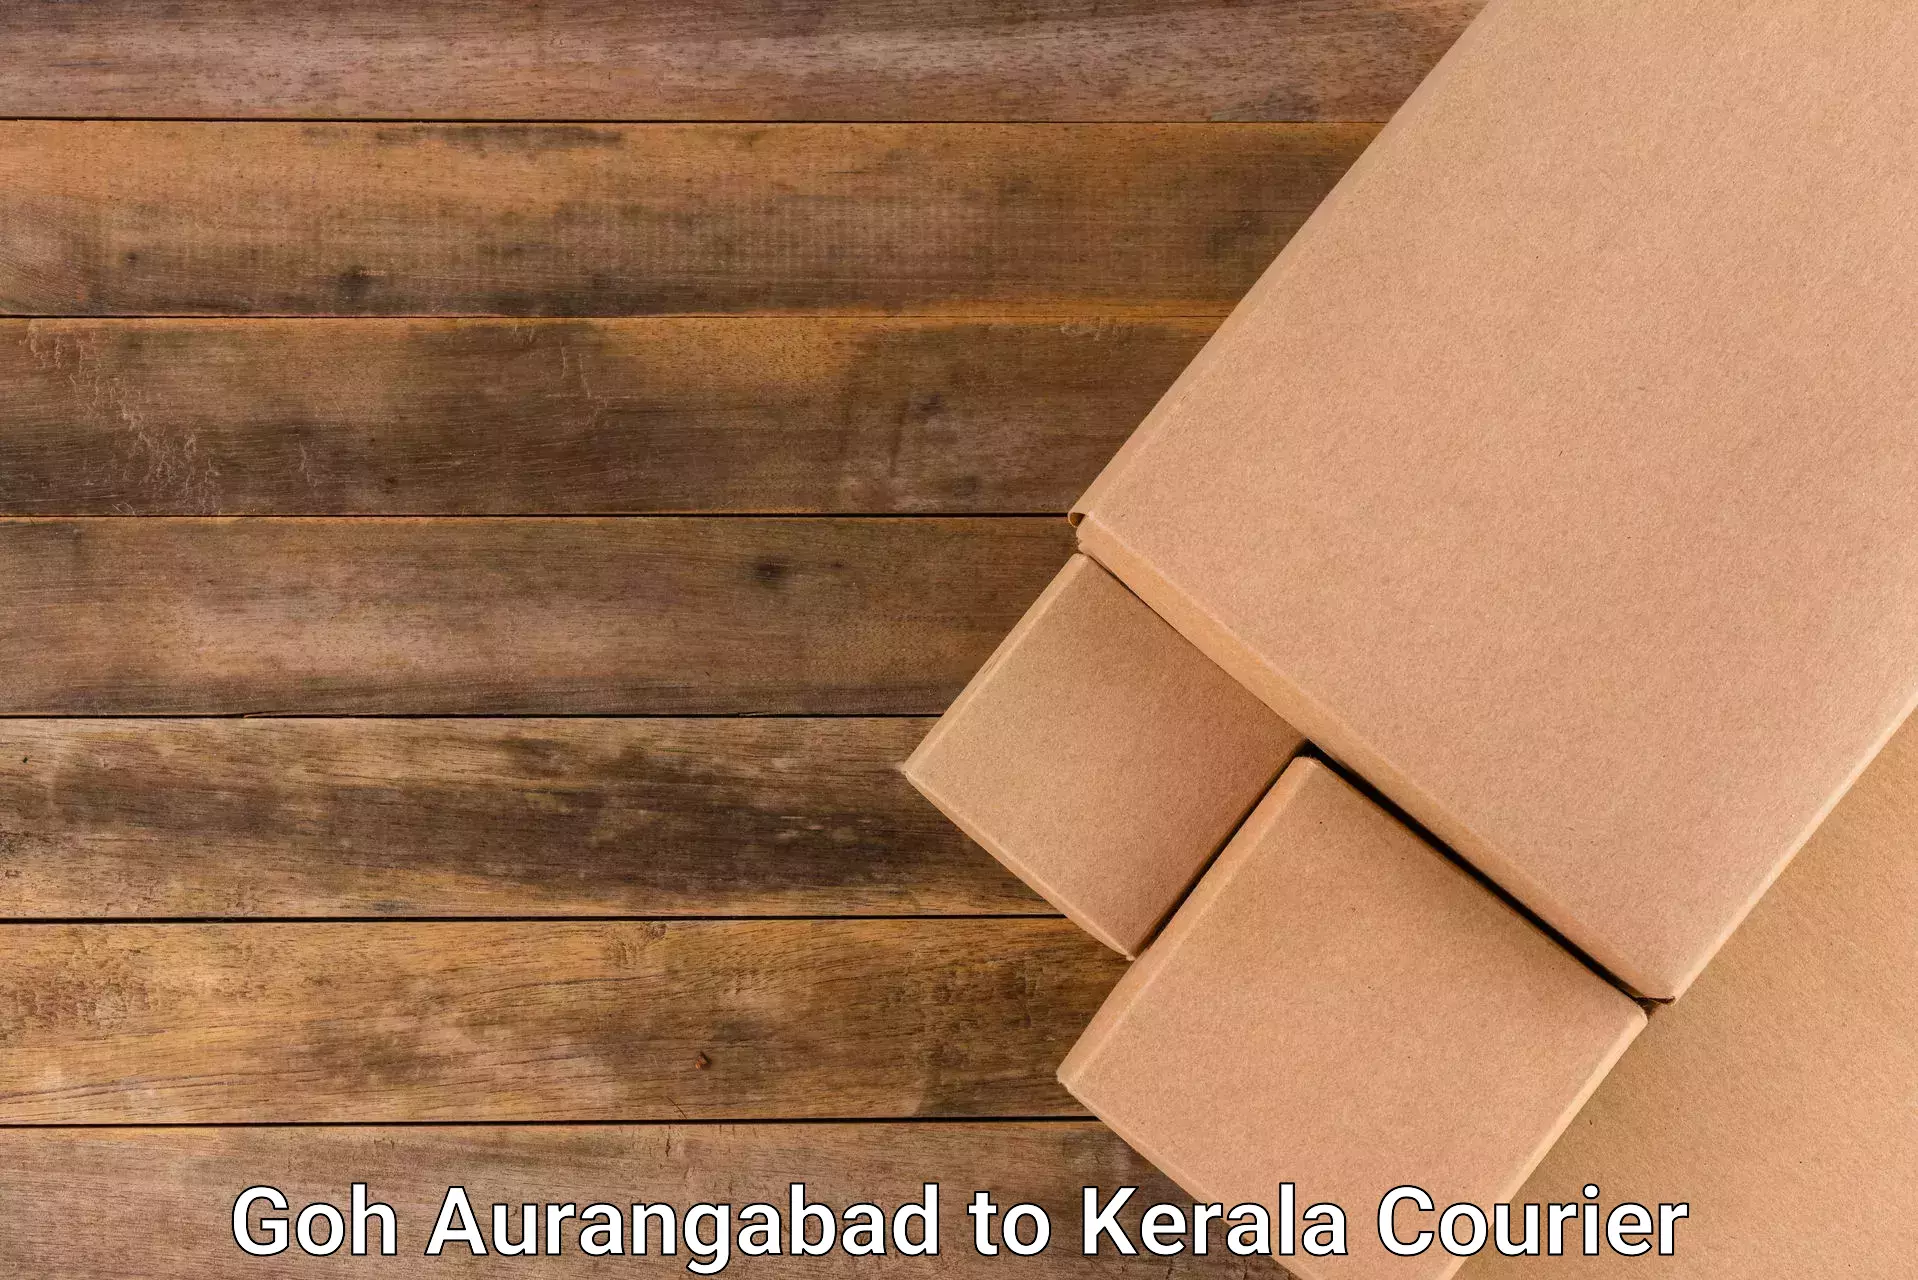 Cash on delivery service Goh Aurangabad to Perambra